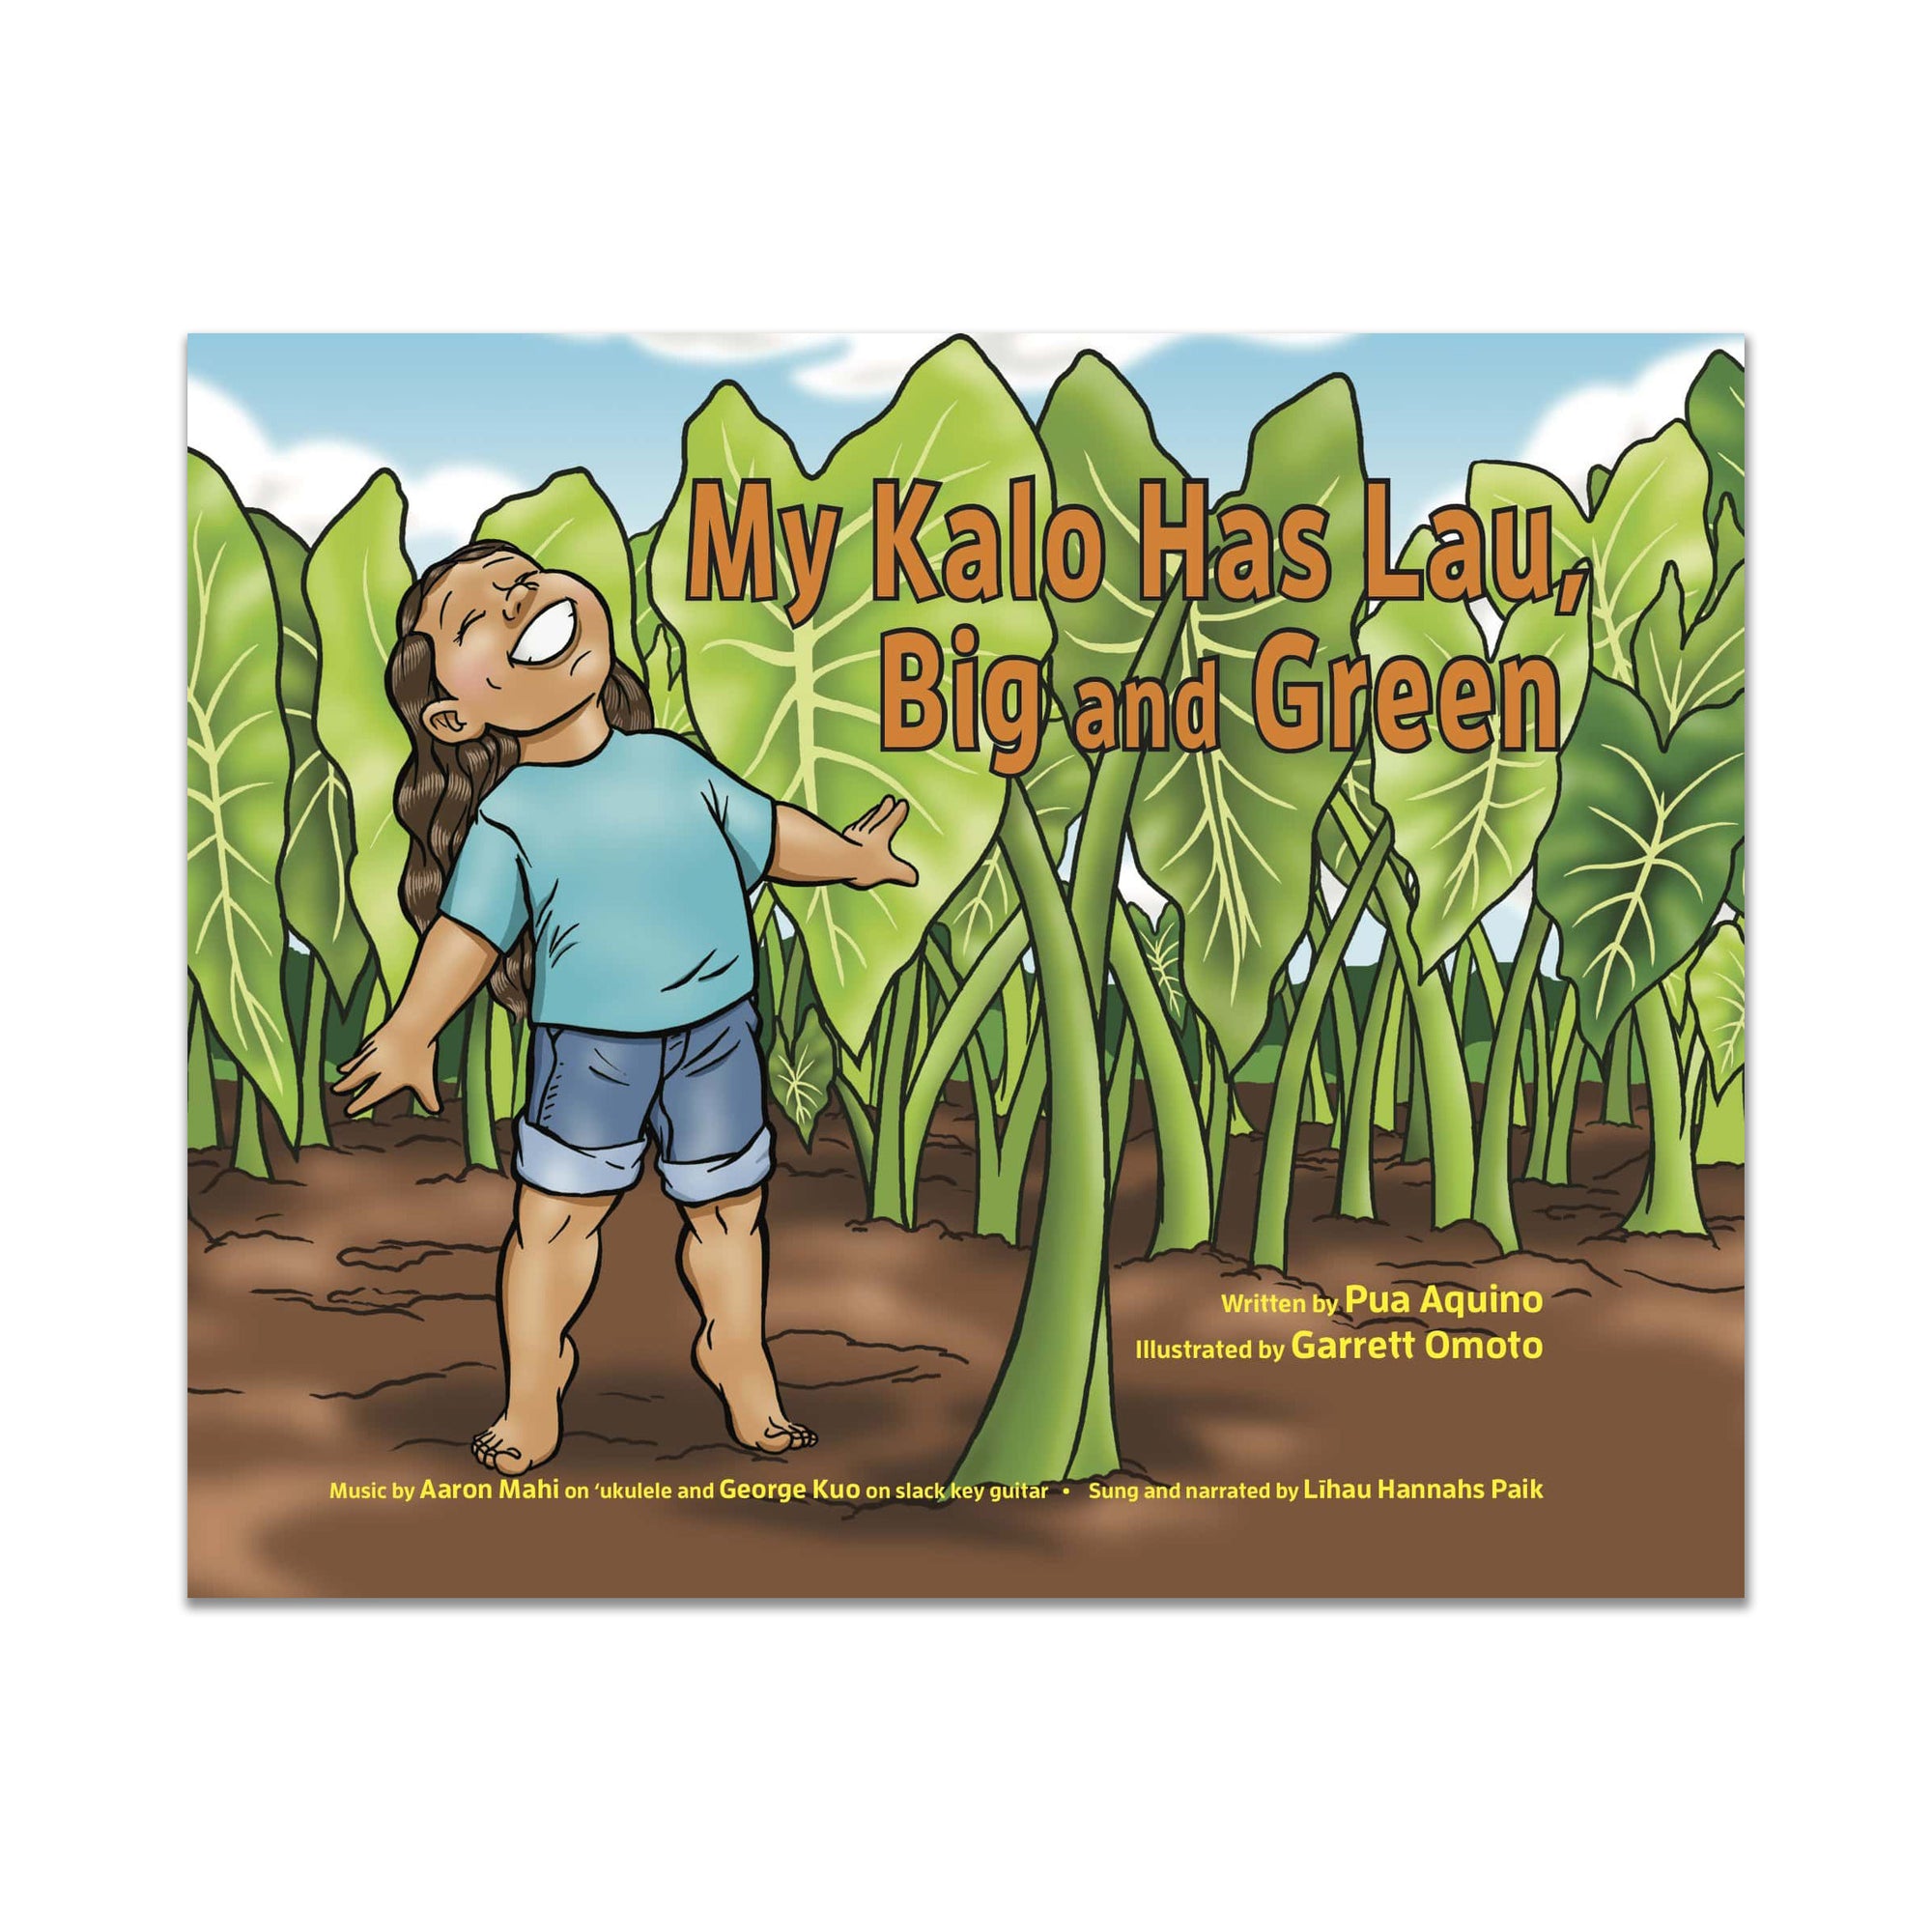 Pop-Up Mākeke - Partners in Development Foundation - My Kalo Has Lau, Big and Green Children's Book